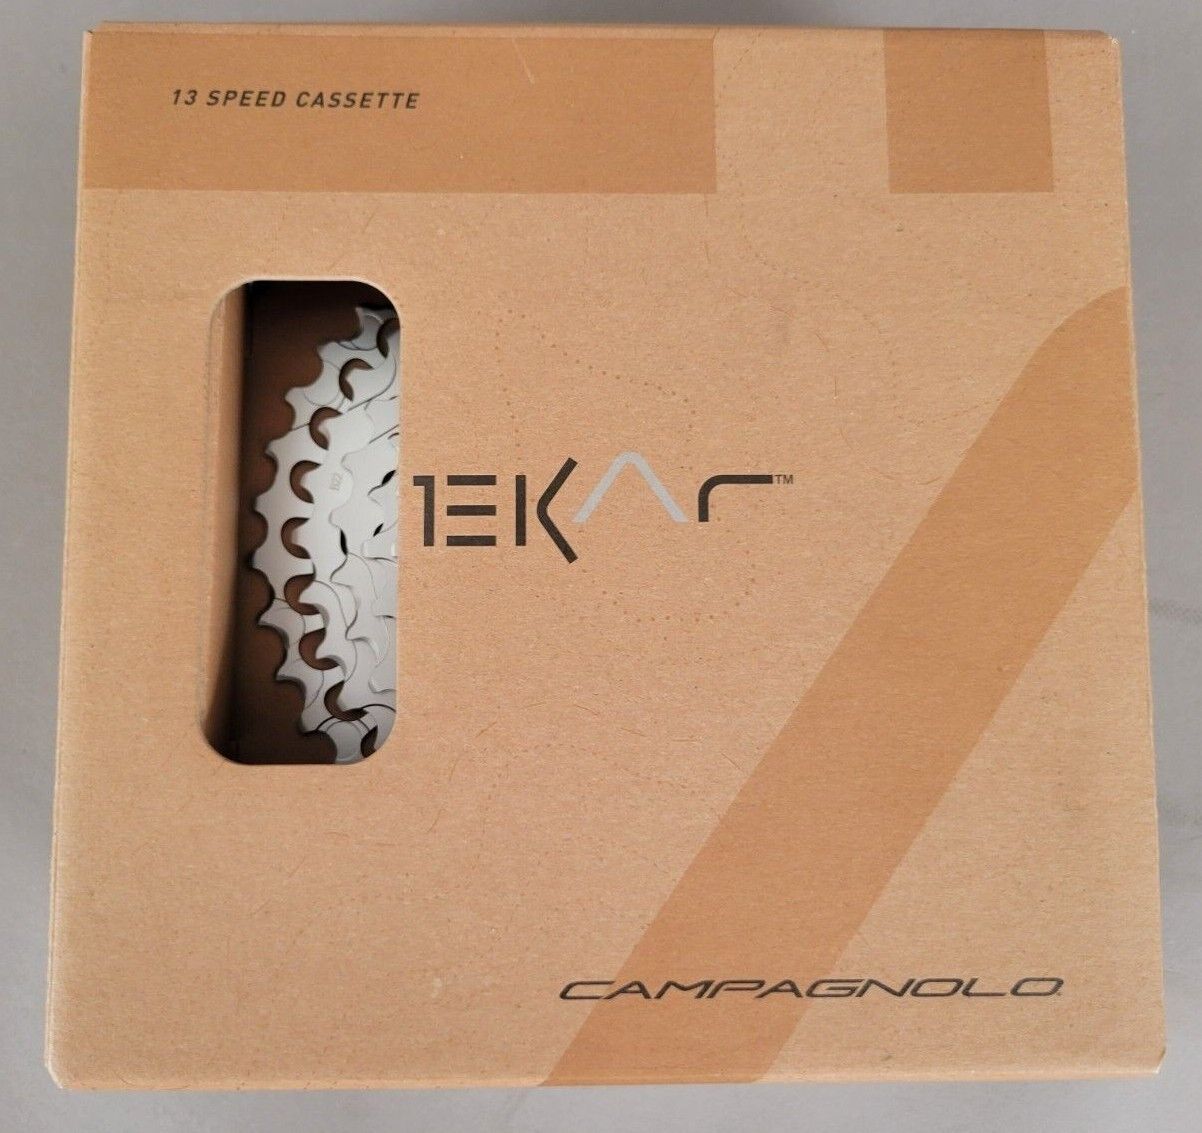 Campagnolo EKAR Cassette 13-Speed 9-36t Silver For N3W Driver